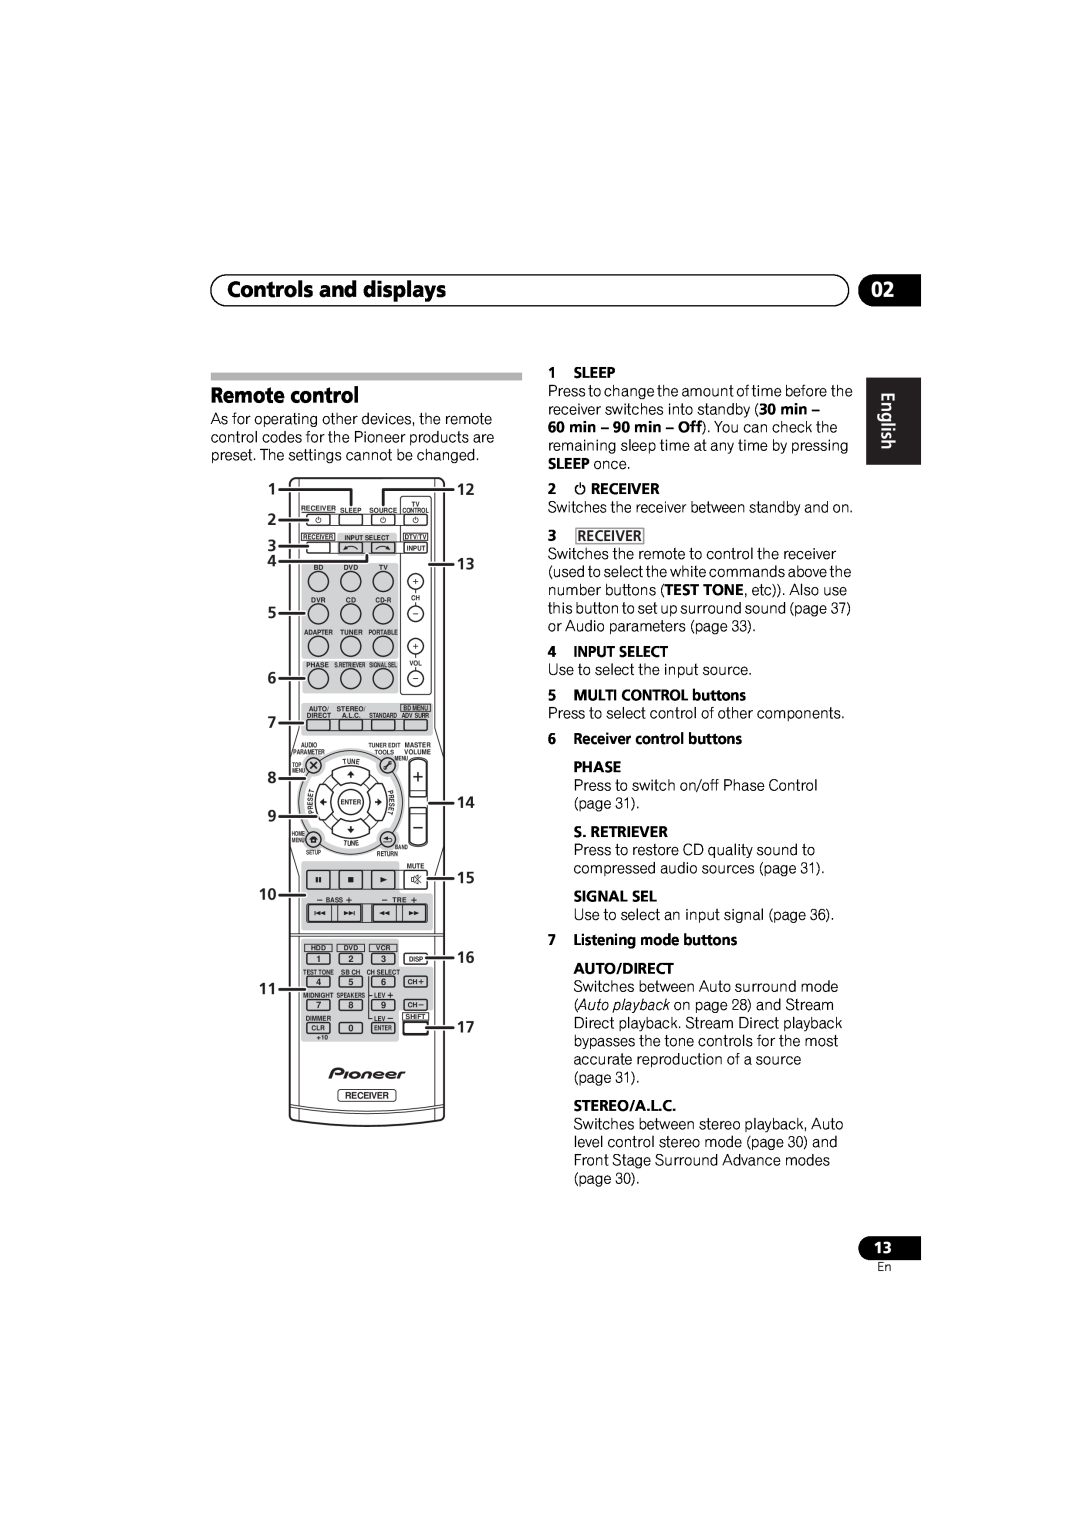 Pioneer VSX-520 manual Controls and displays Remote control, Receiver 